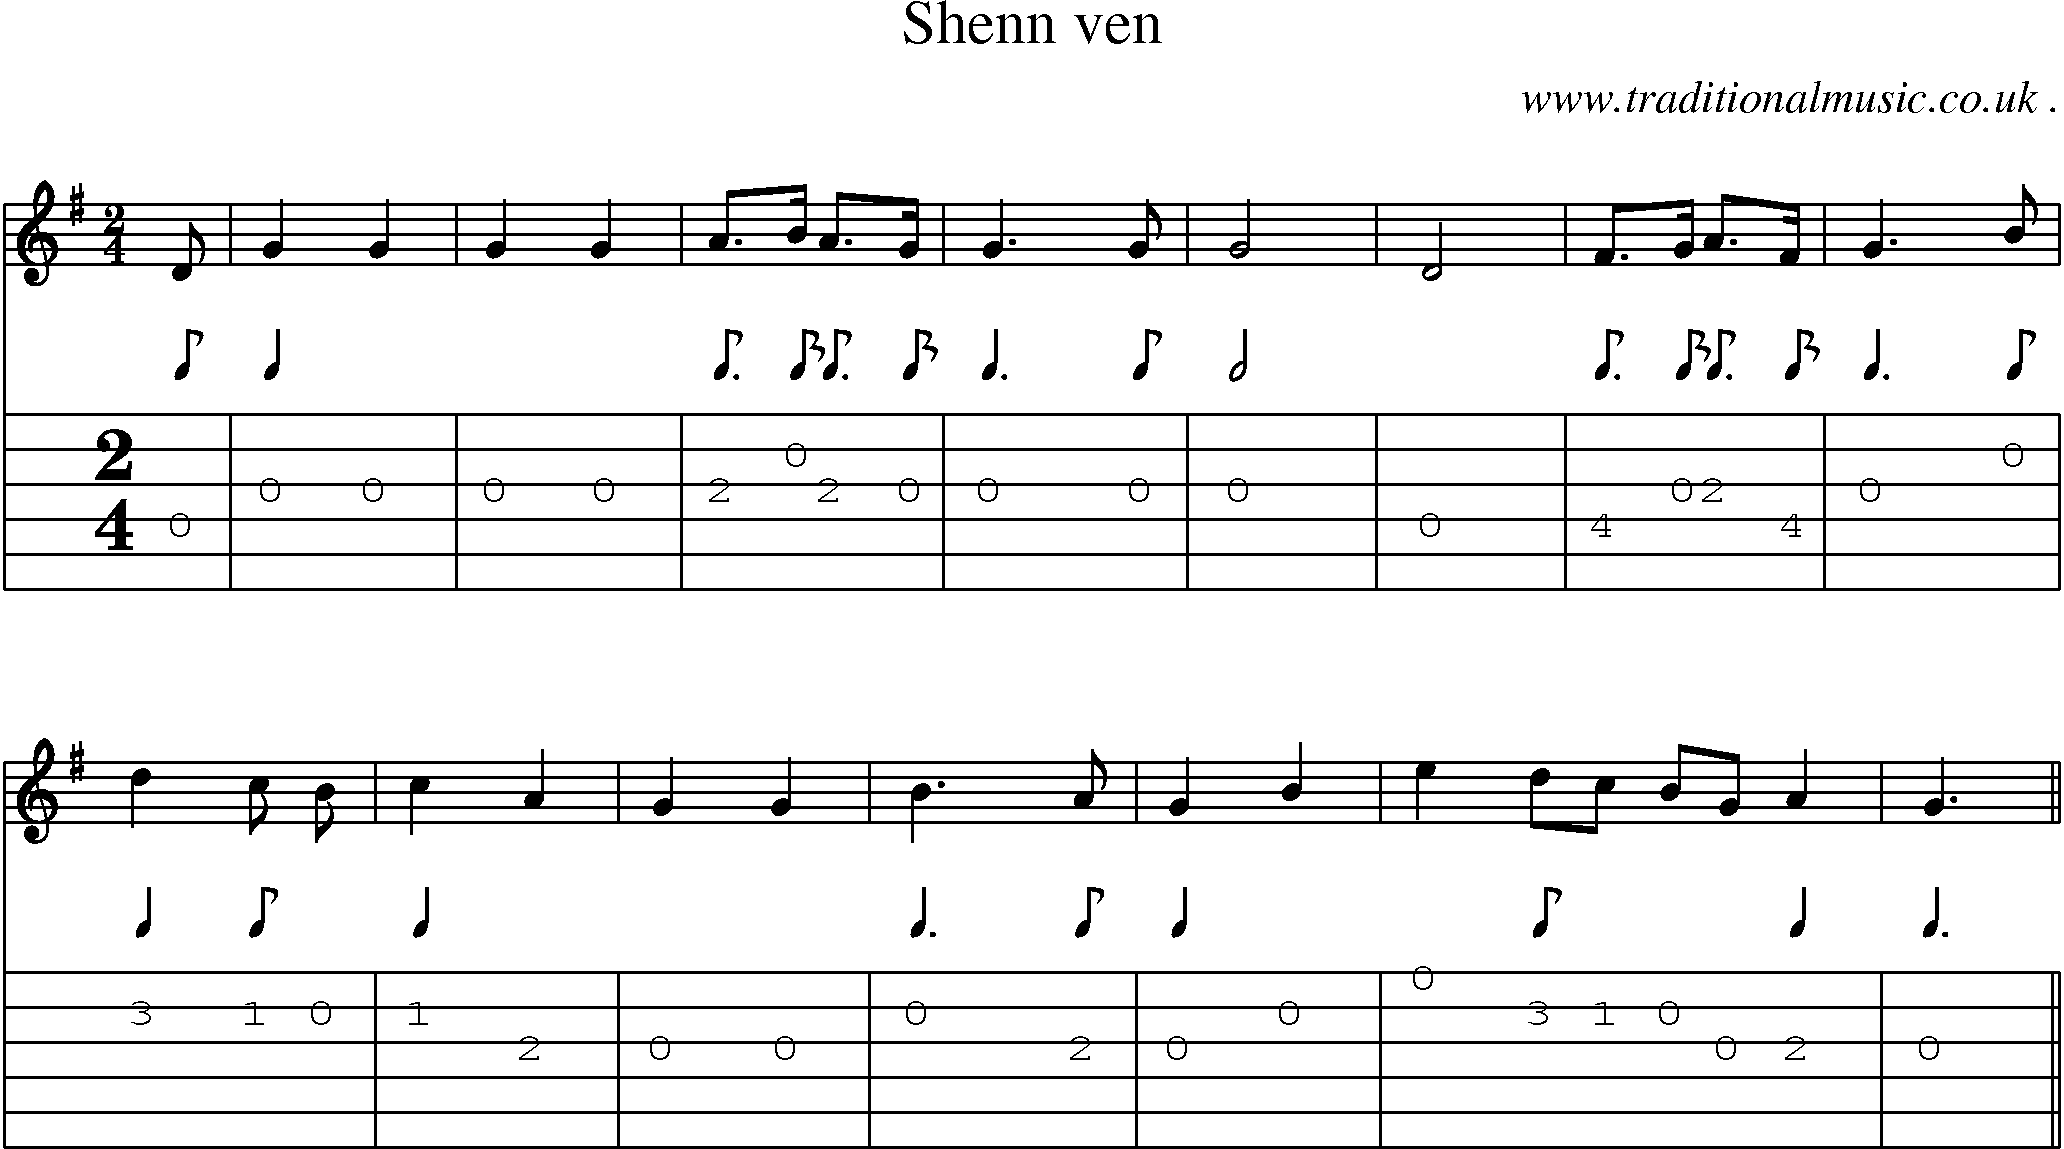 Sheet-Music and Guitar Tabs for Shenn Ven